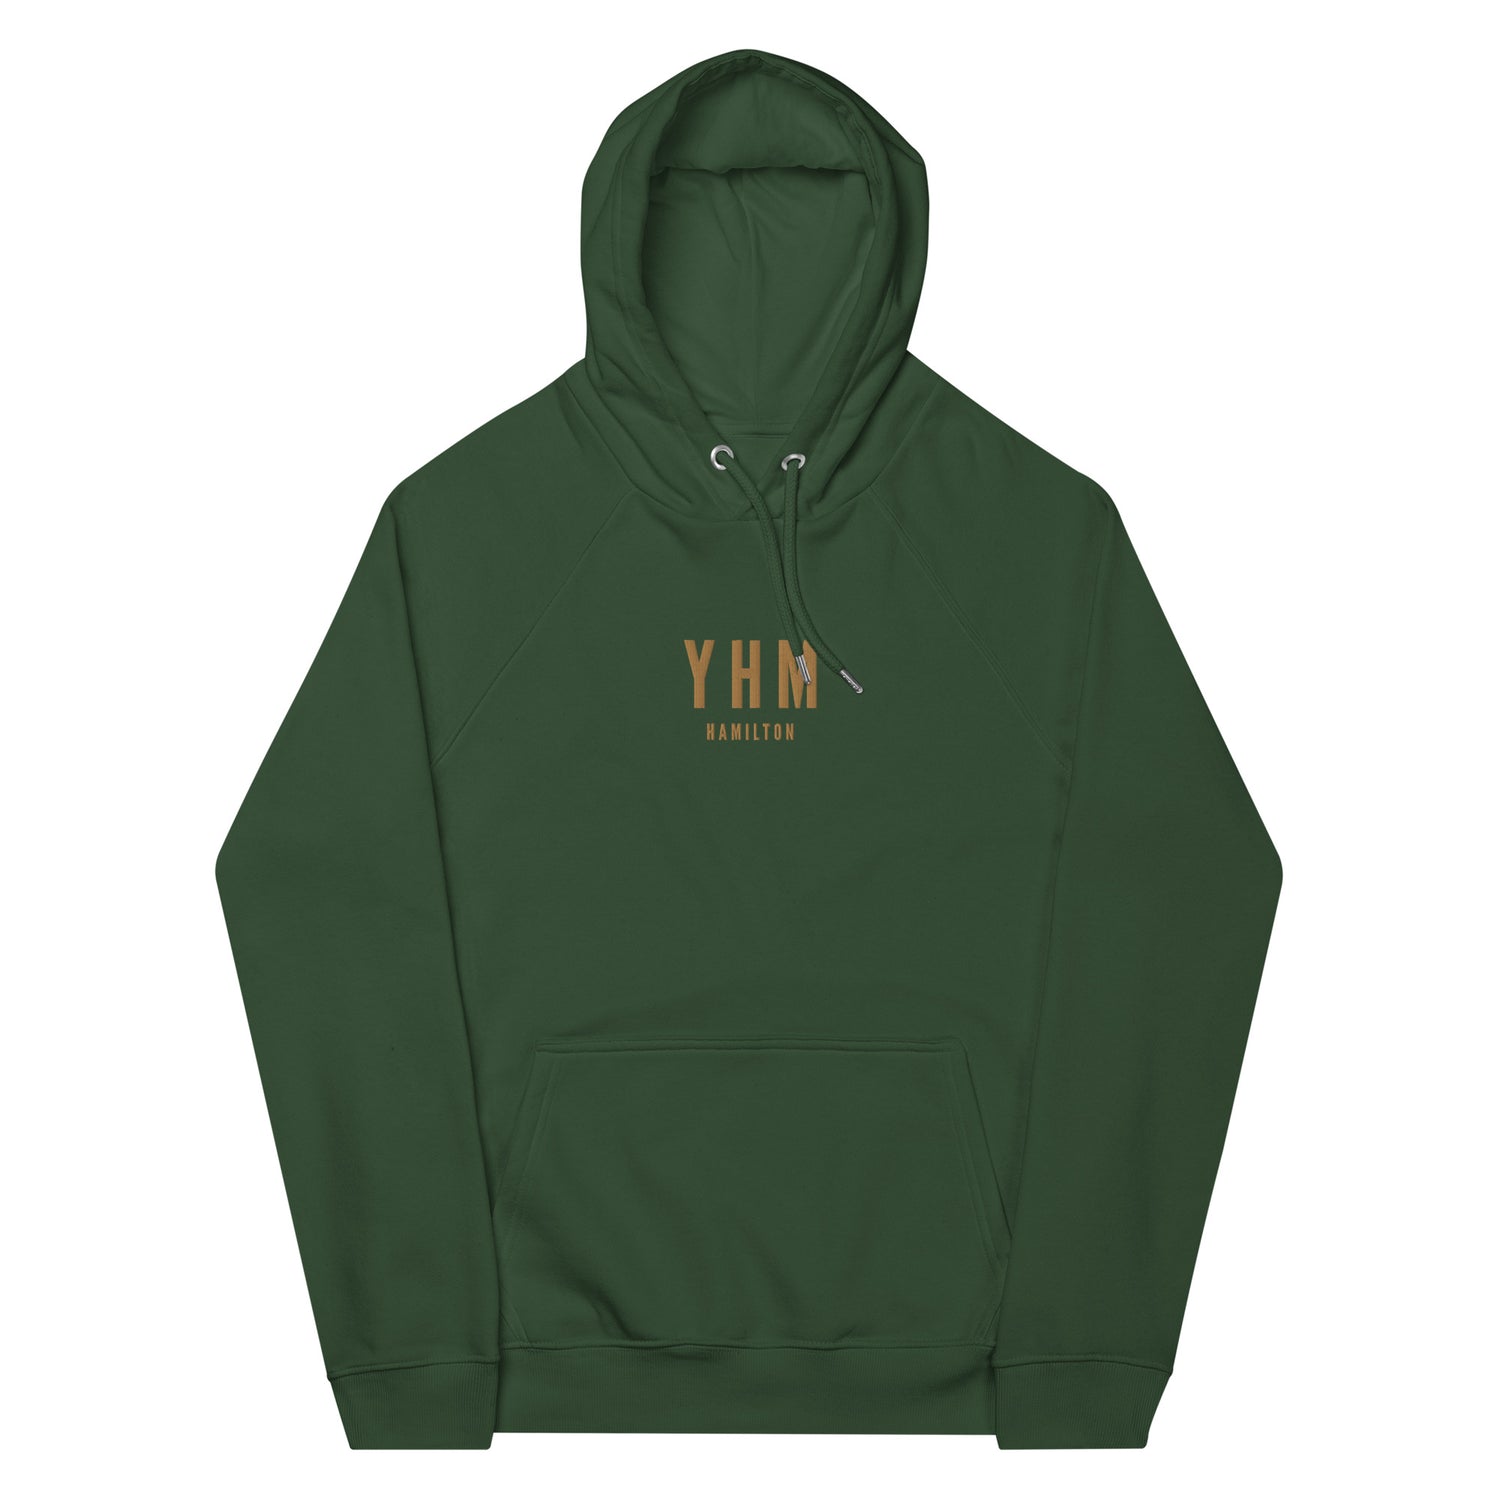 Hamilton Ontario Hoodies and Sweatshirts • YHM Airport Code